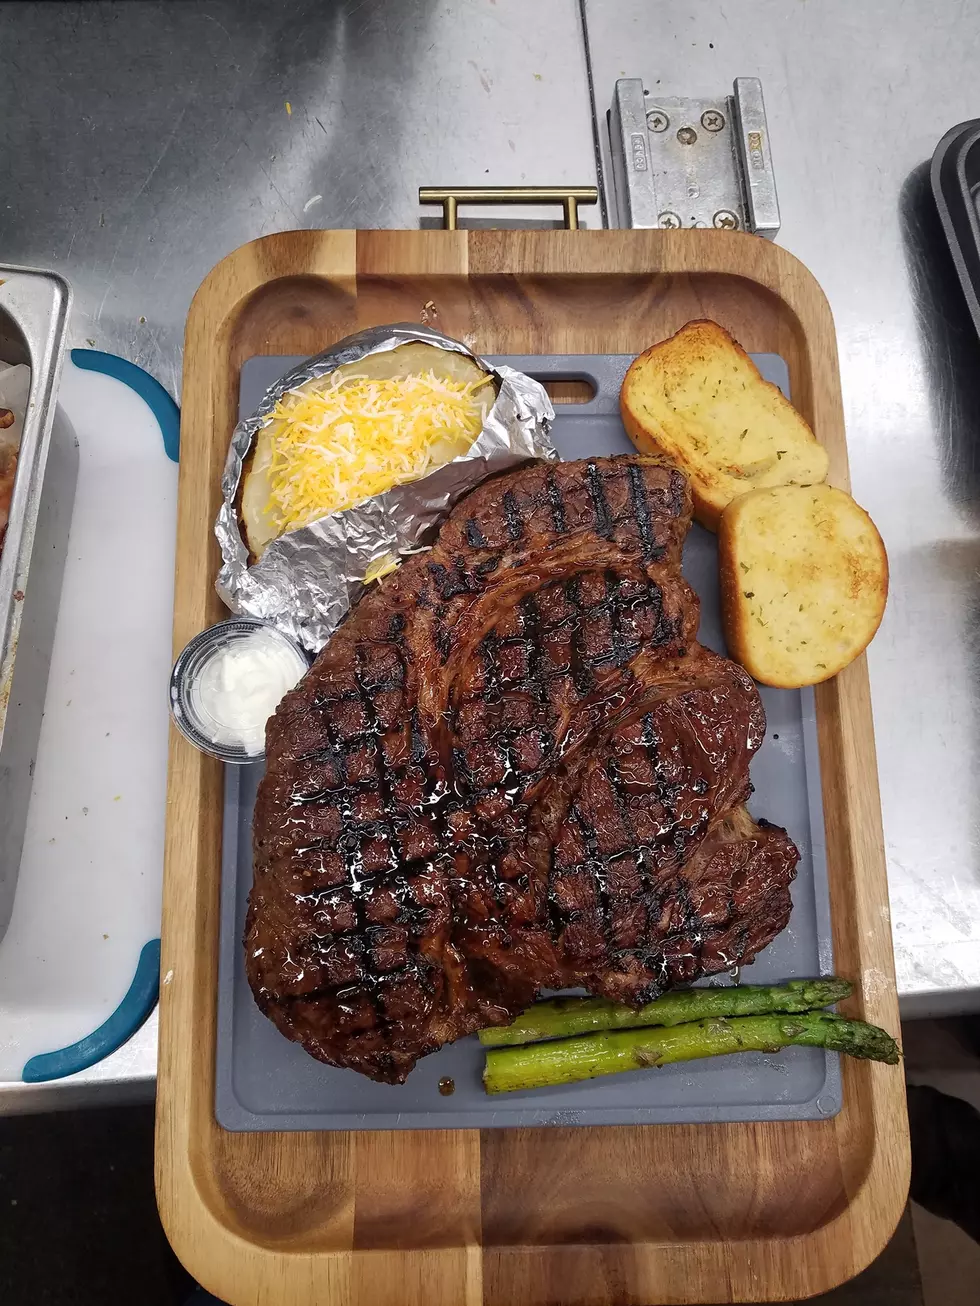 This Tuscaloosa Restaurant Has an Insane Steak Challenge